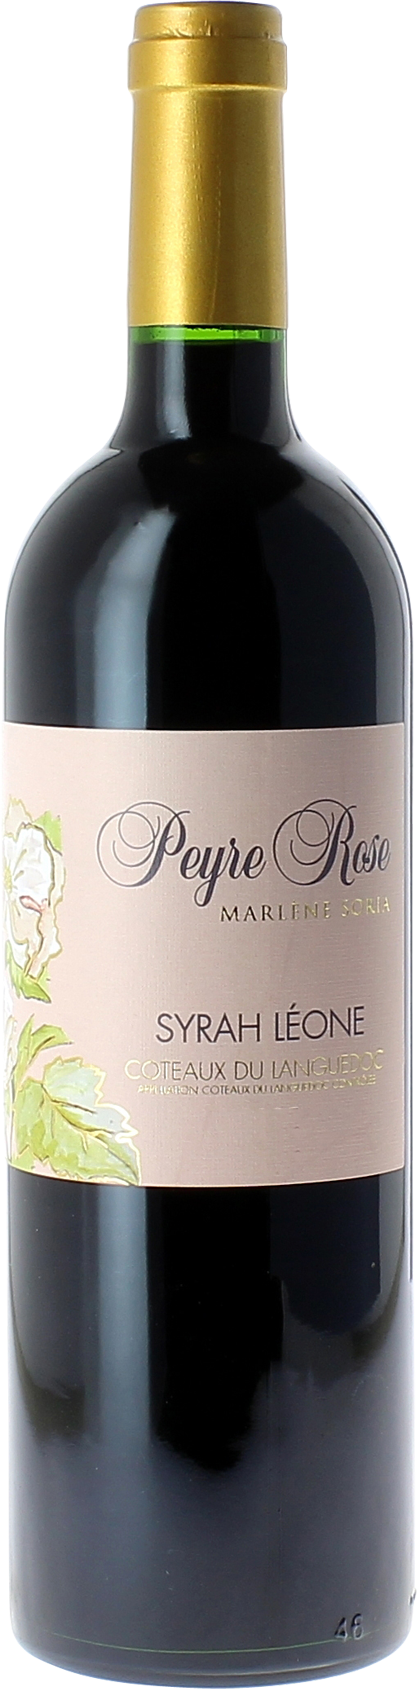 Peyre Rose Syrah Leone 2006